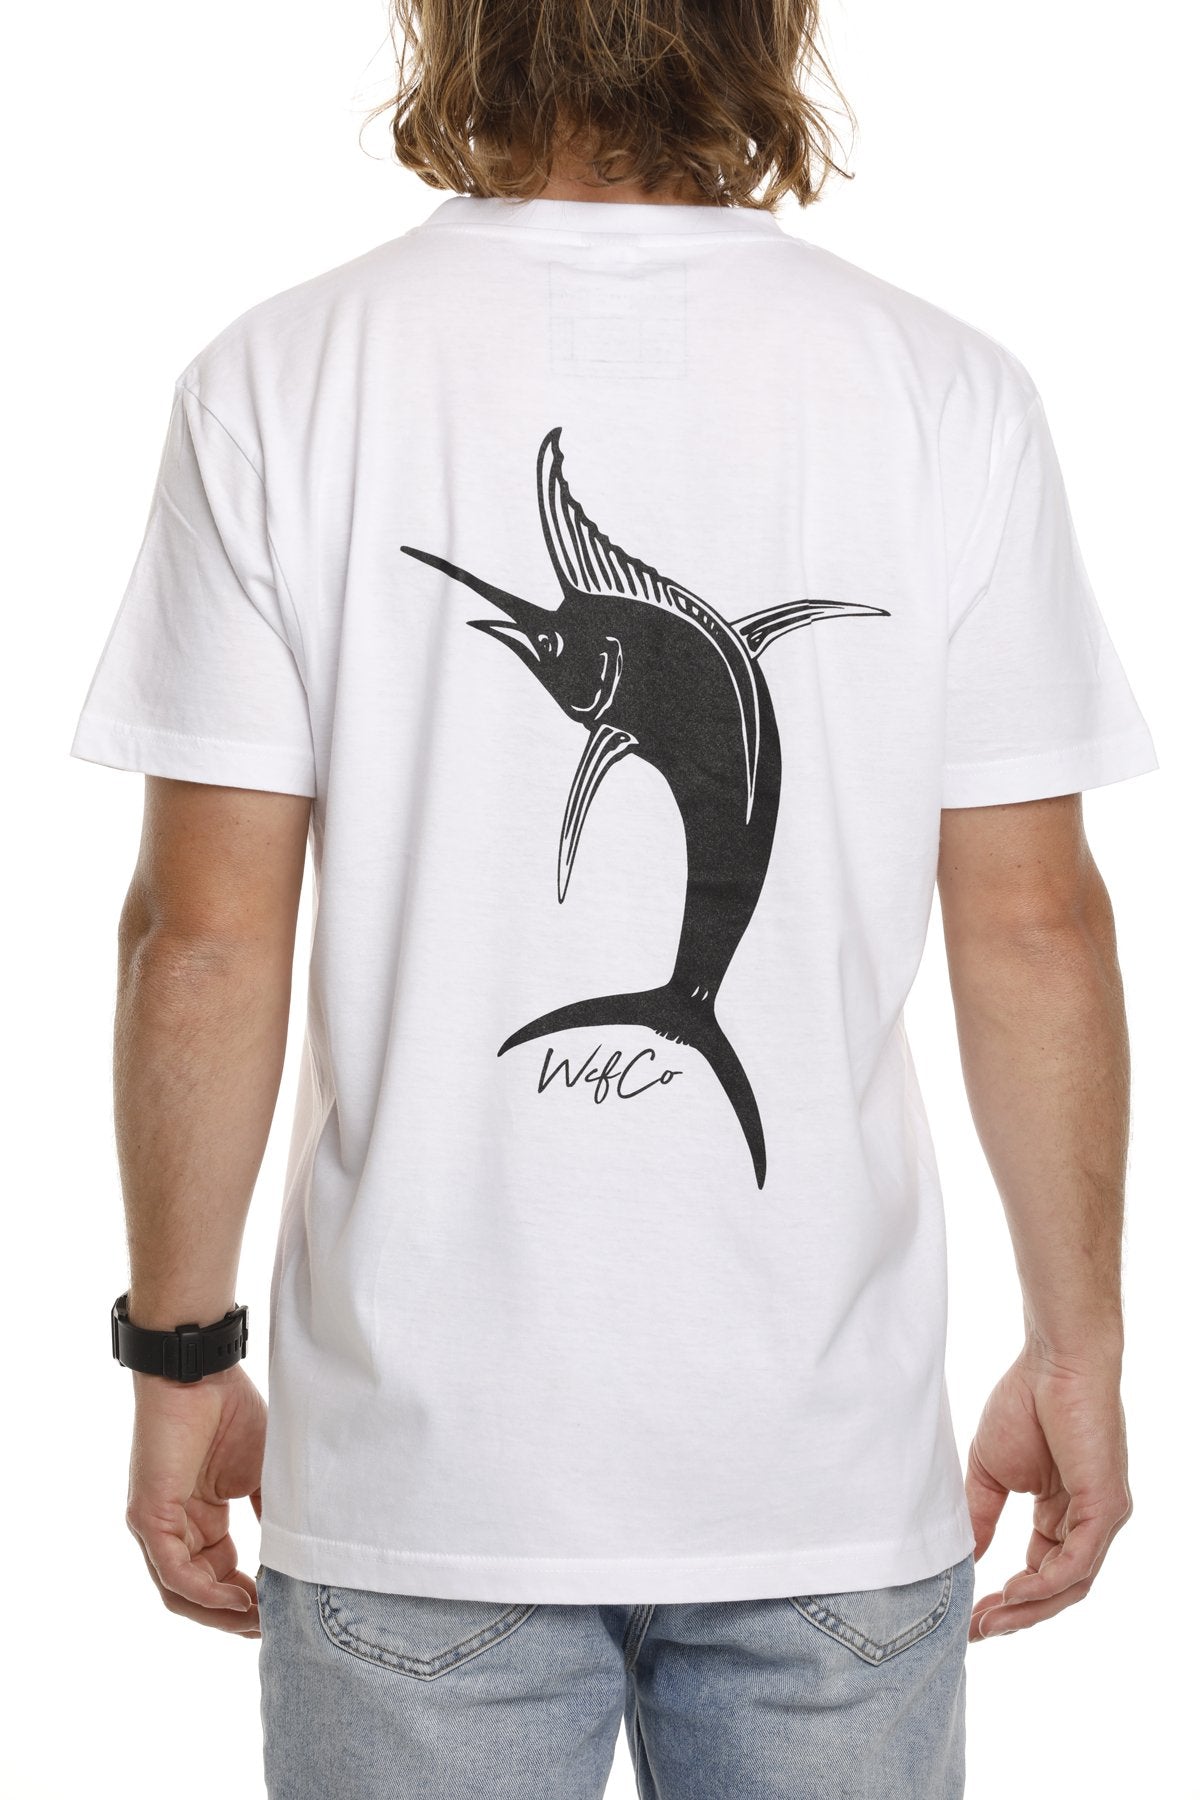 West Coast Fishing Co Black Marlin Short Sleeve Tshirt - Compleat Angler  Nedlands Pro Tackle